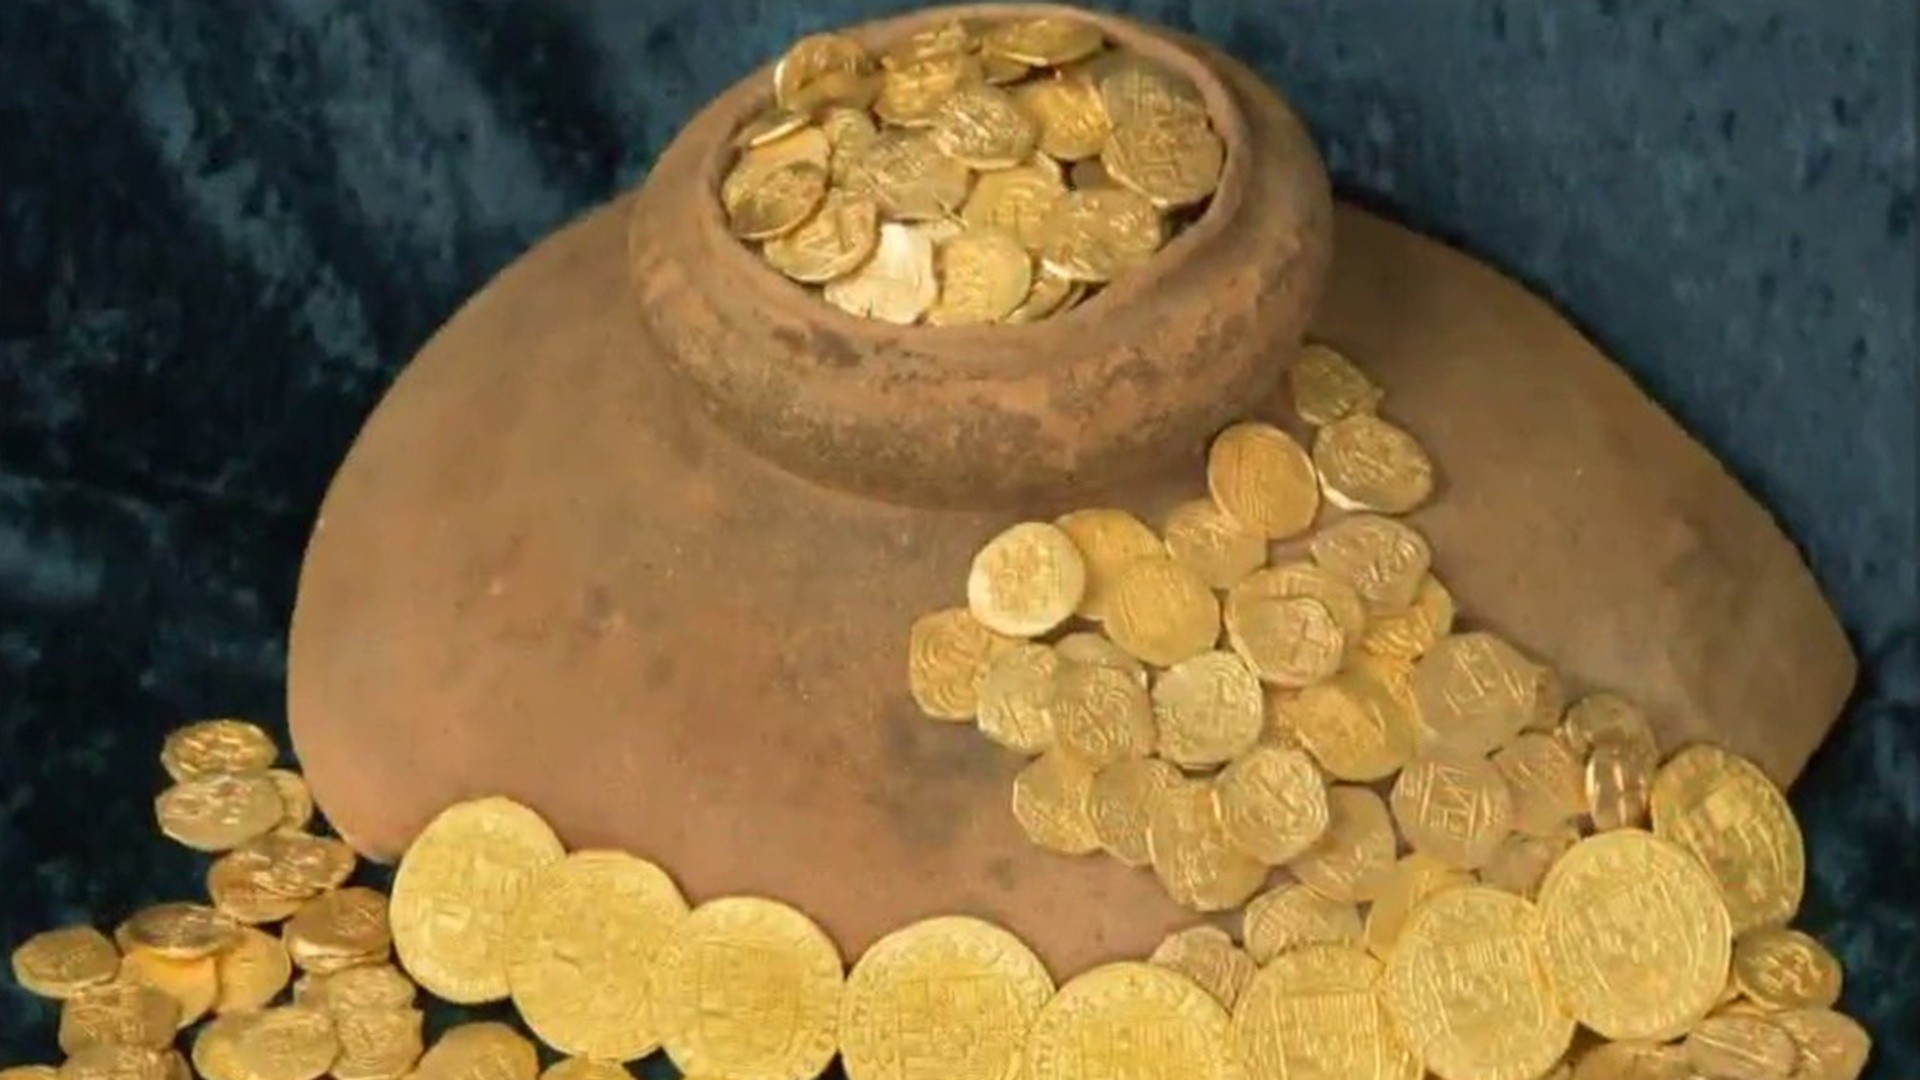 Откуп монетами. Клад золото. Монета с кувшином. Кувшин с золотыми монетами. Крестьянские клады.